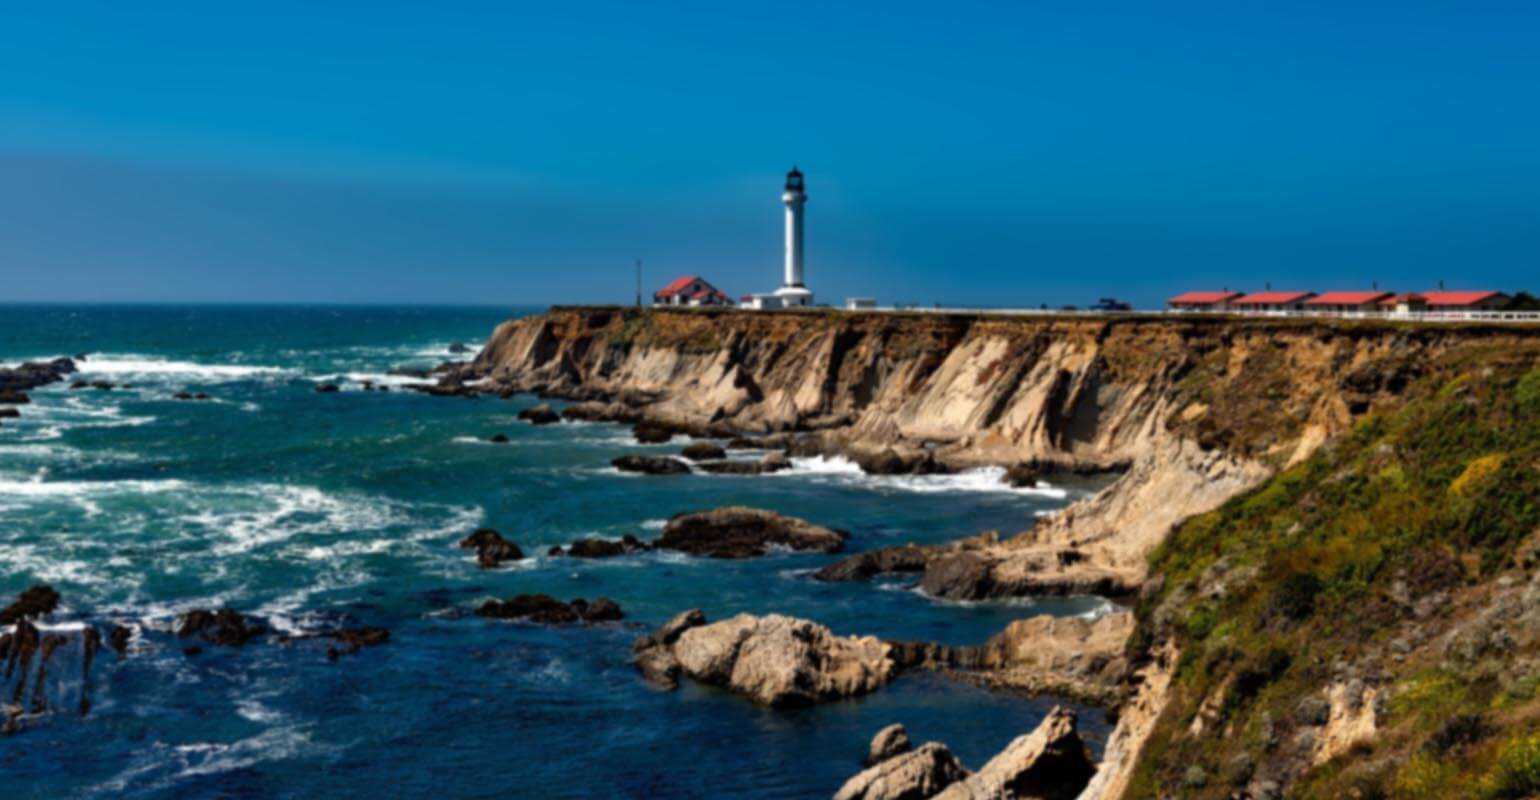 Blurry seaside lighthouse landscape image